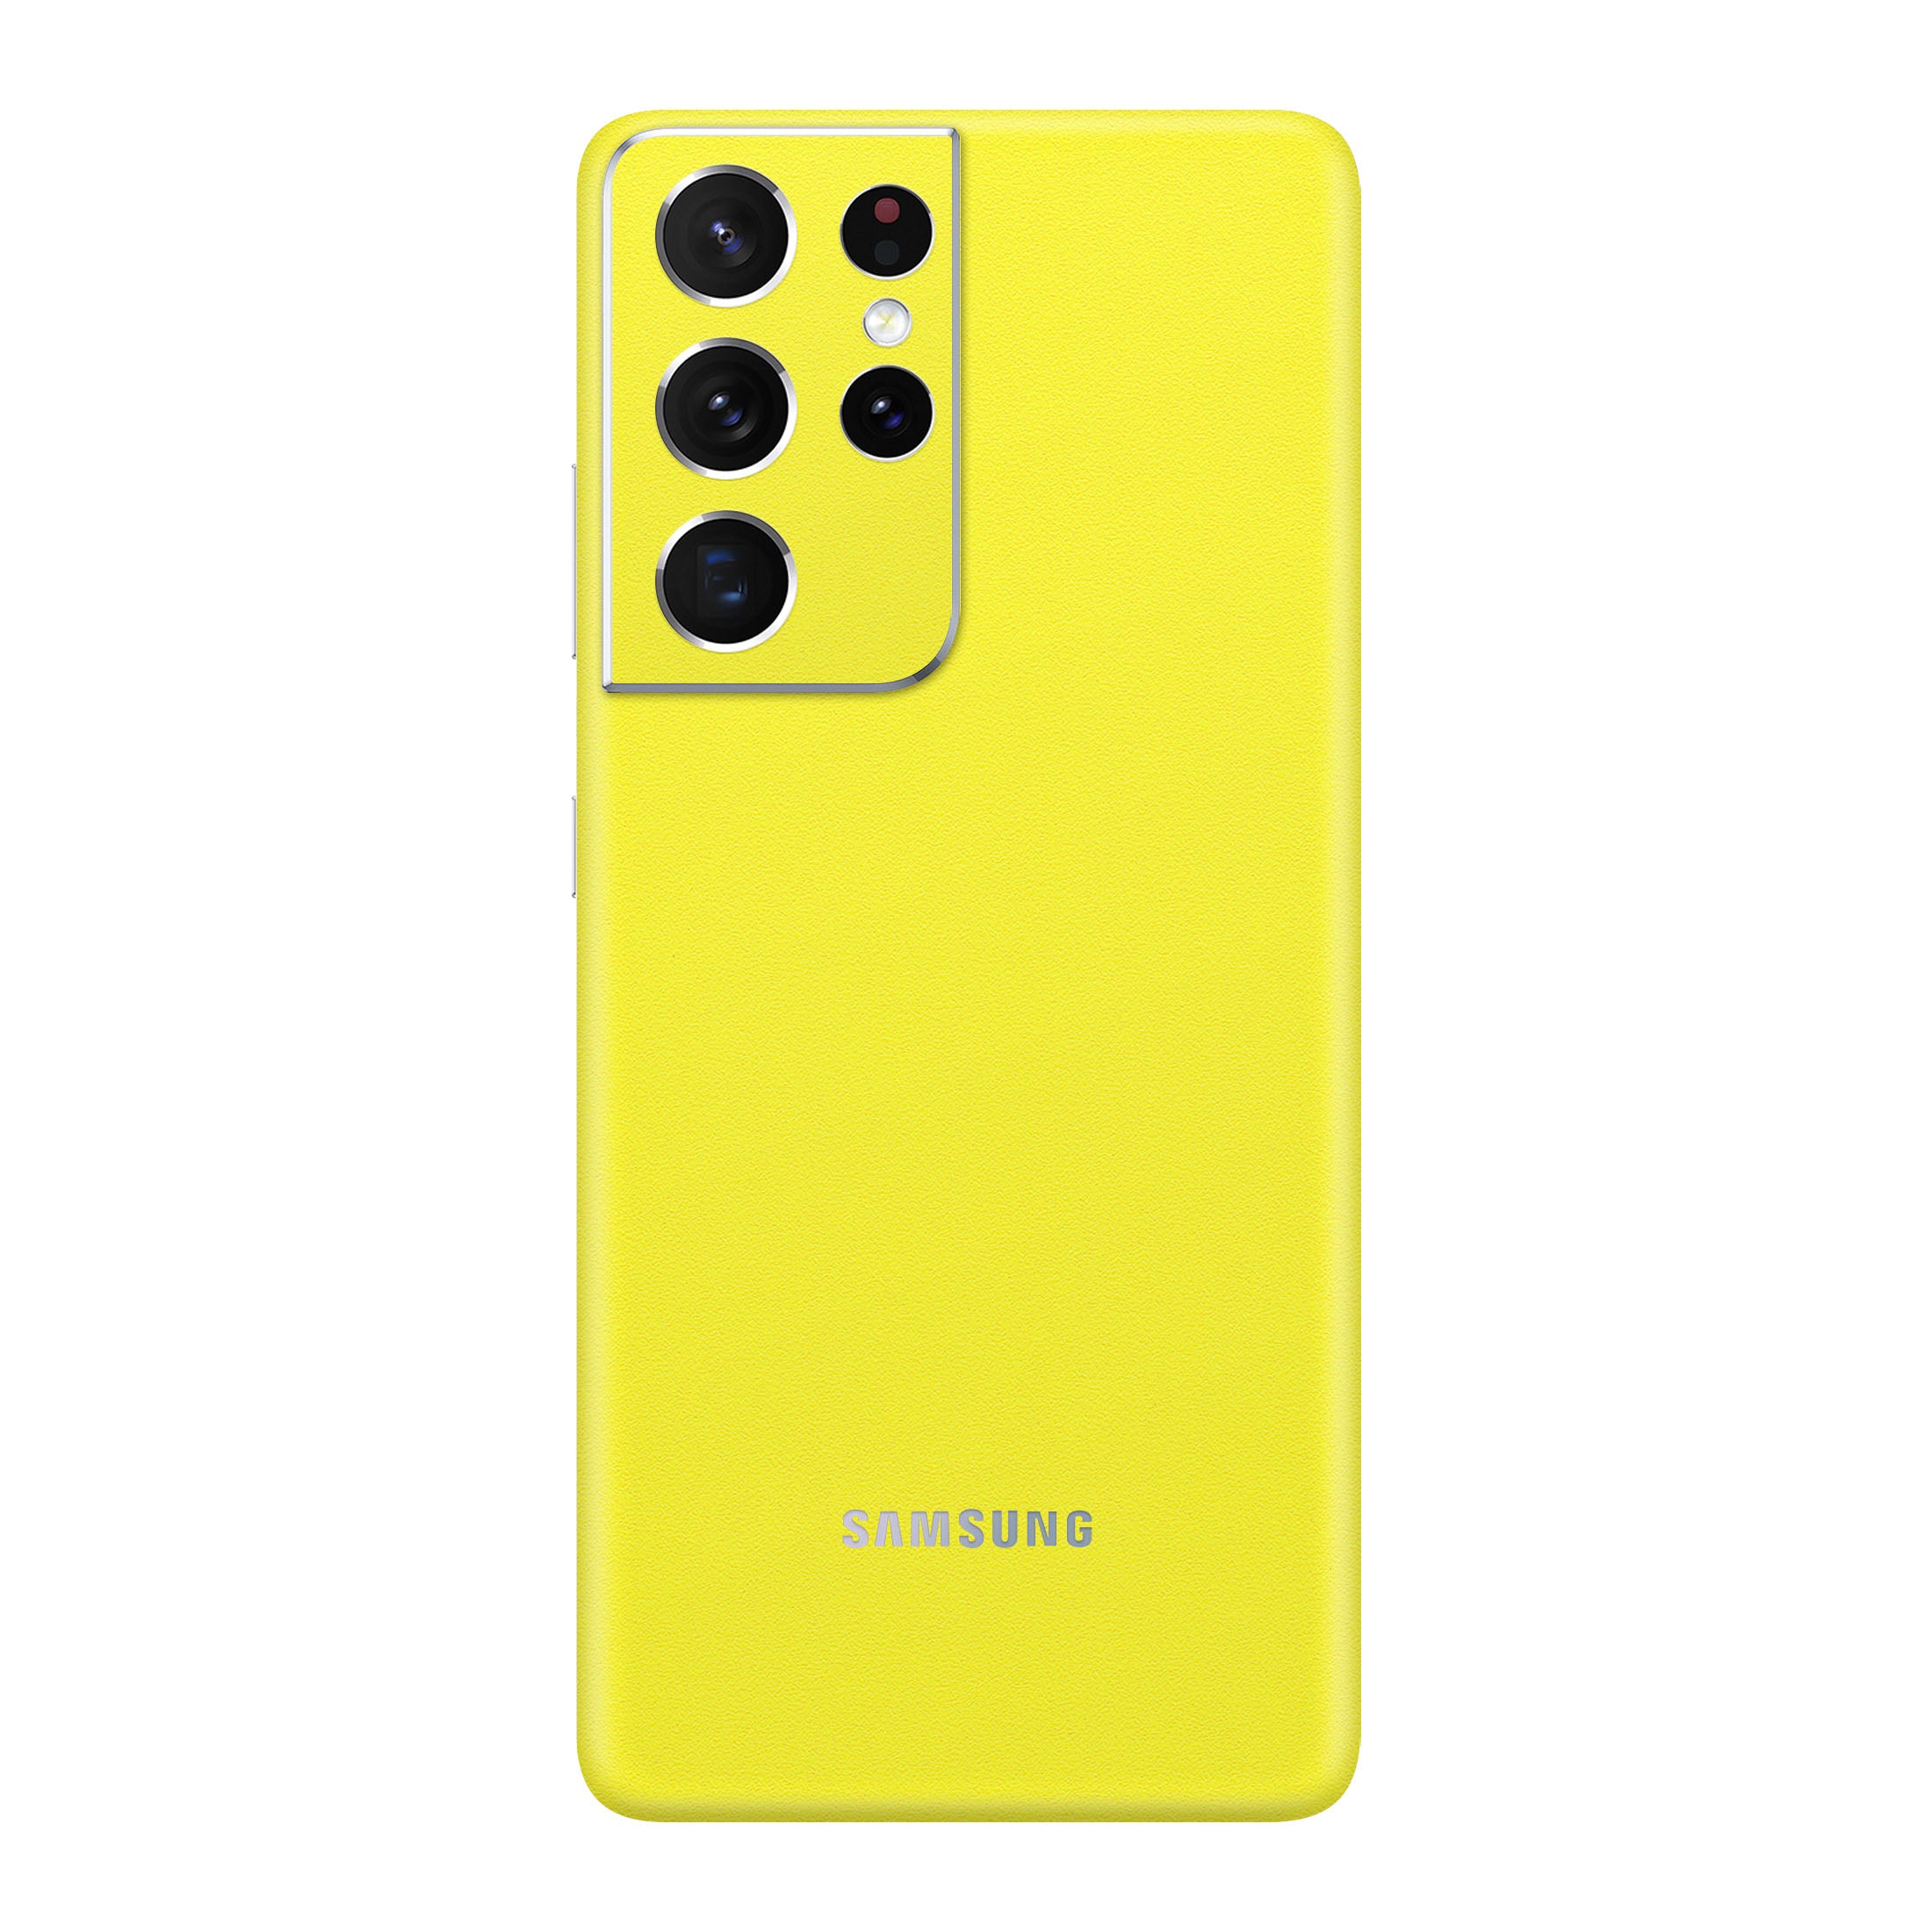 Gloss Yellow Skin for Samsung S21 Ultra